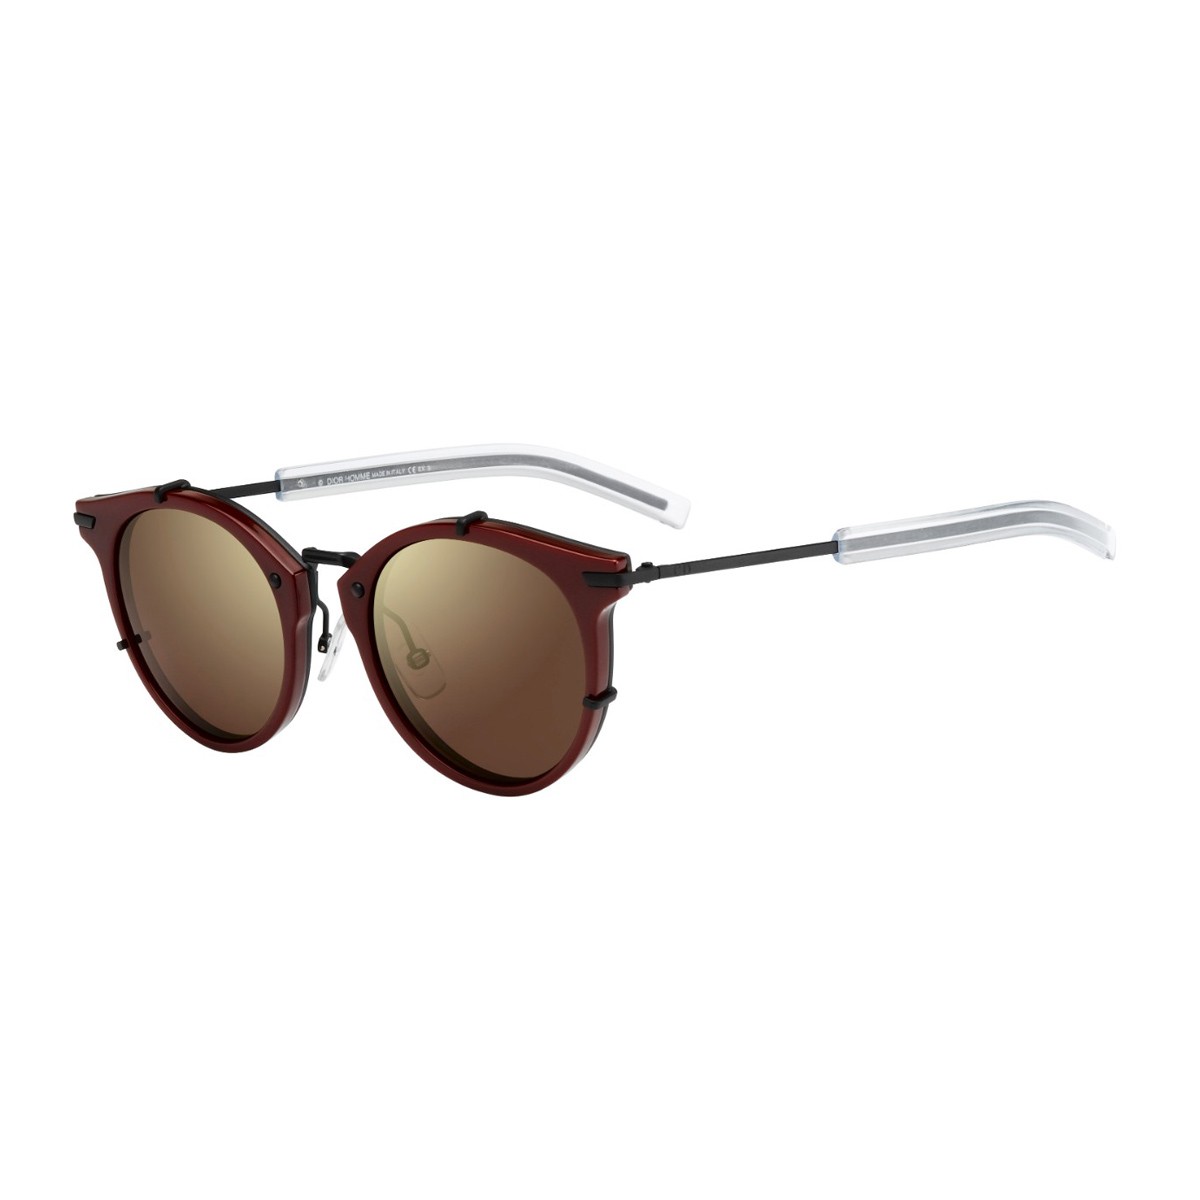 Dior 0196 S | Men's sunglasses